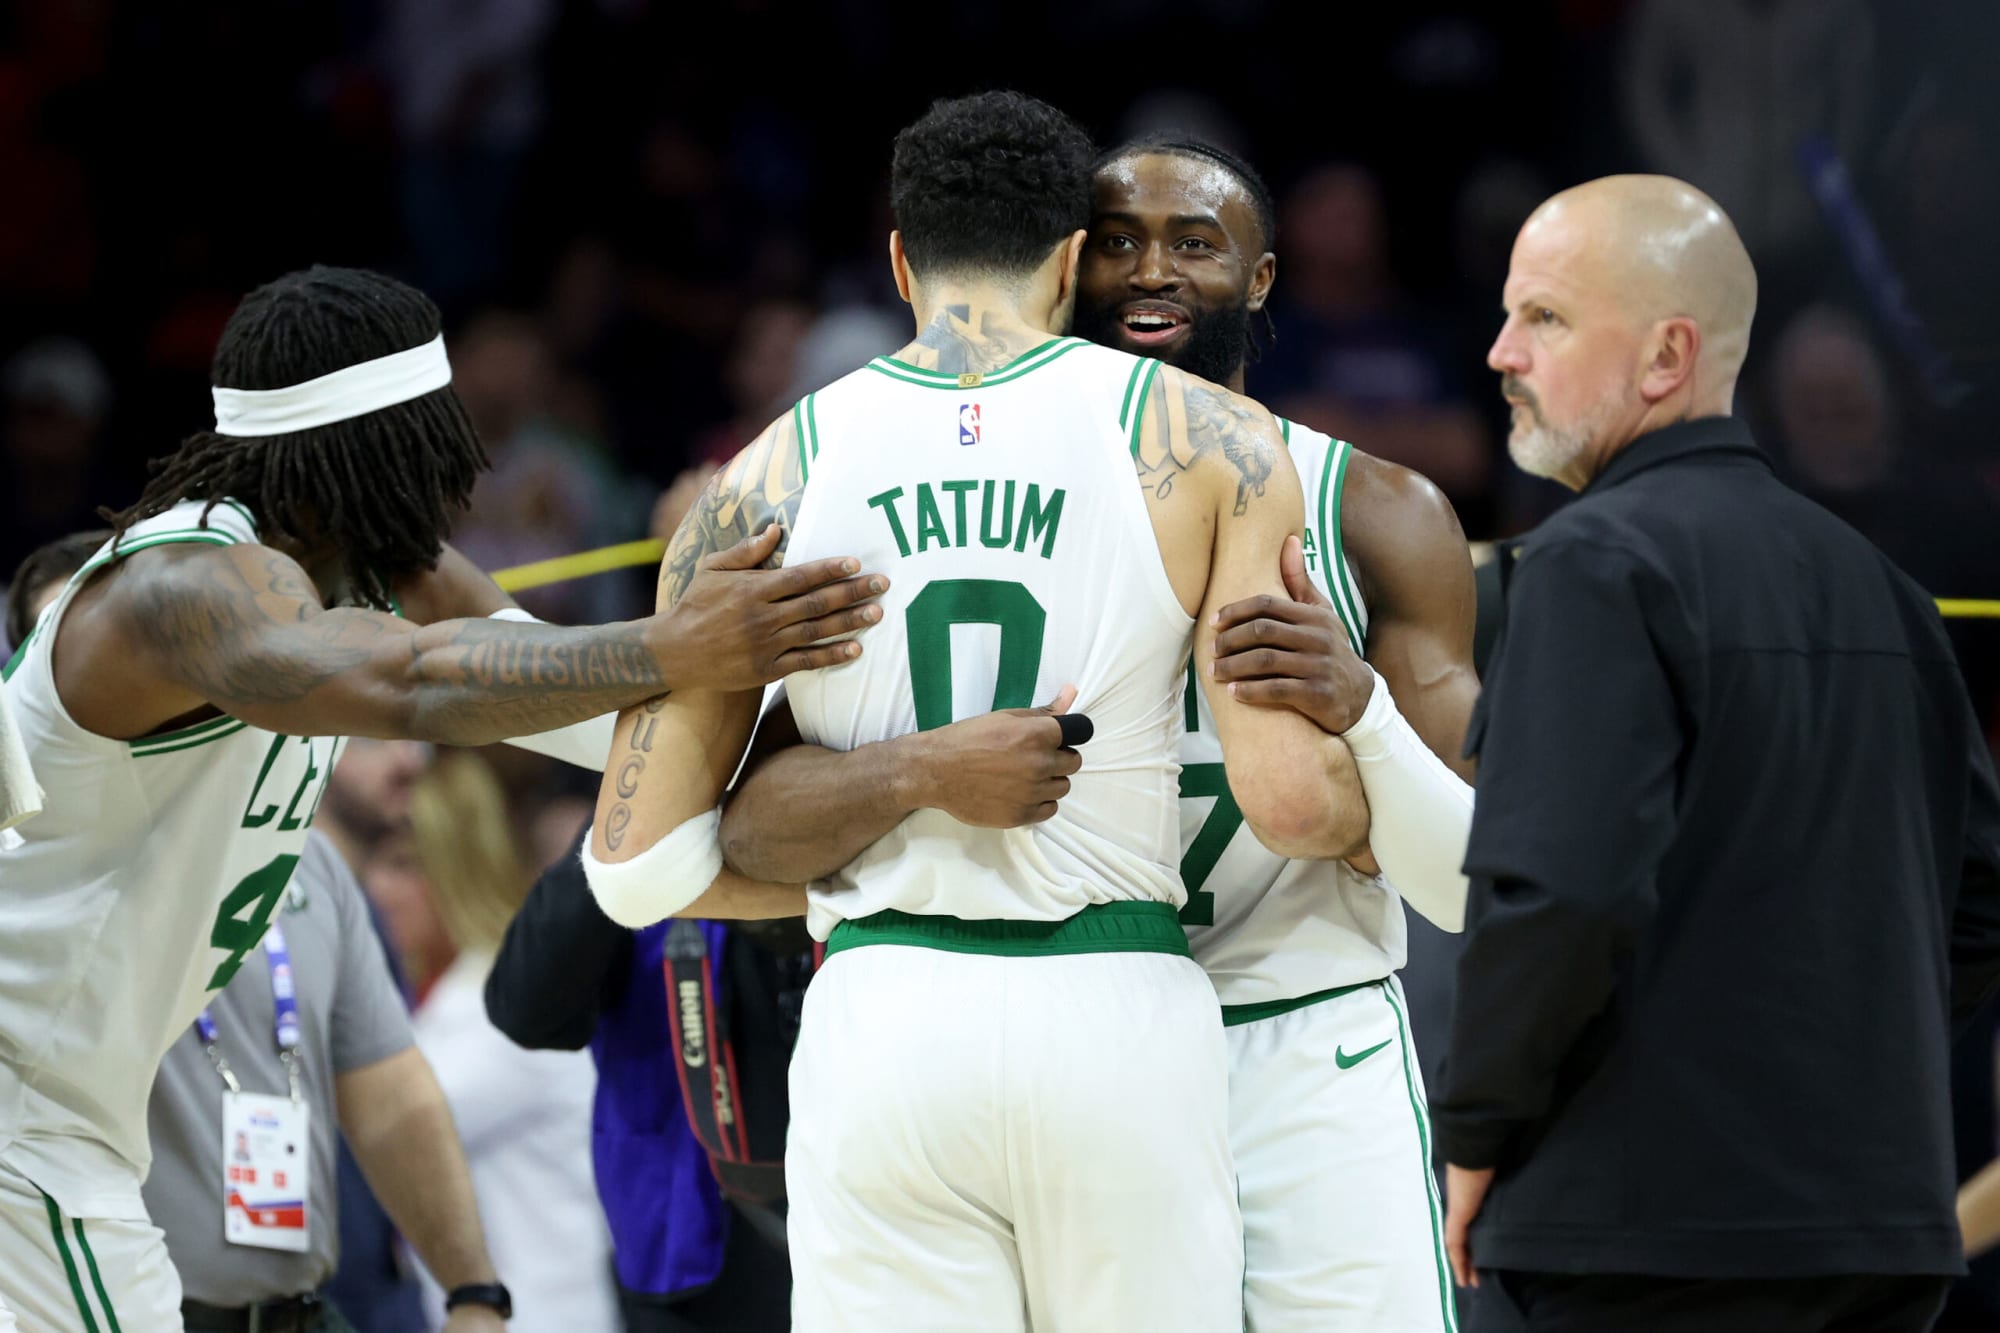 300+] Boston Celtics Wallpapers